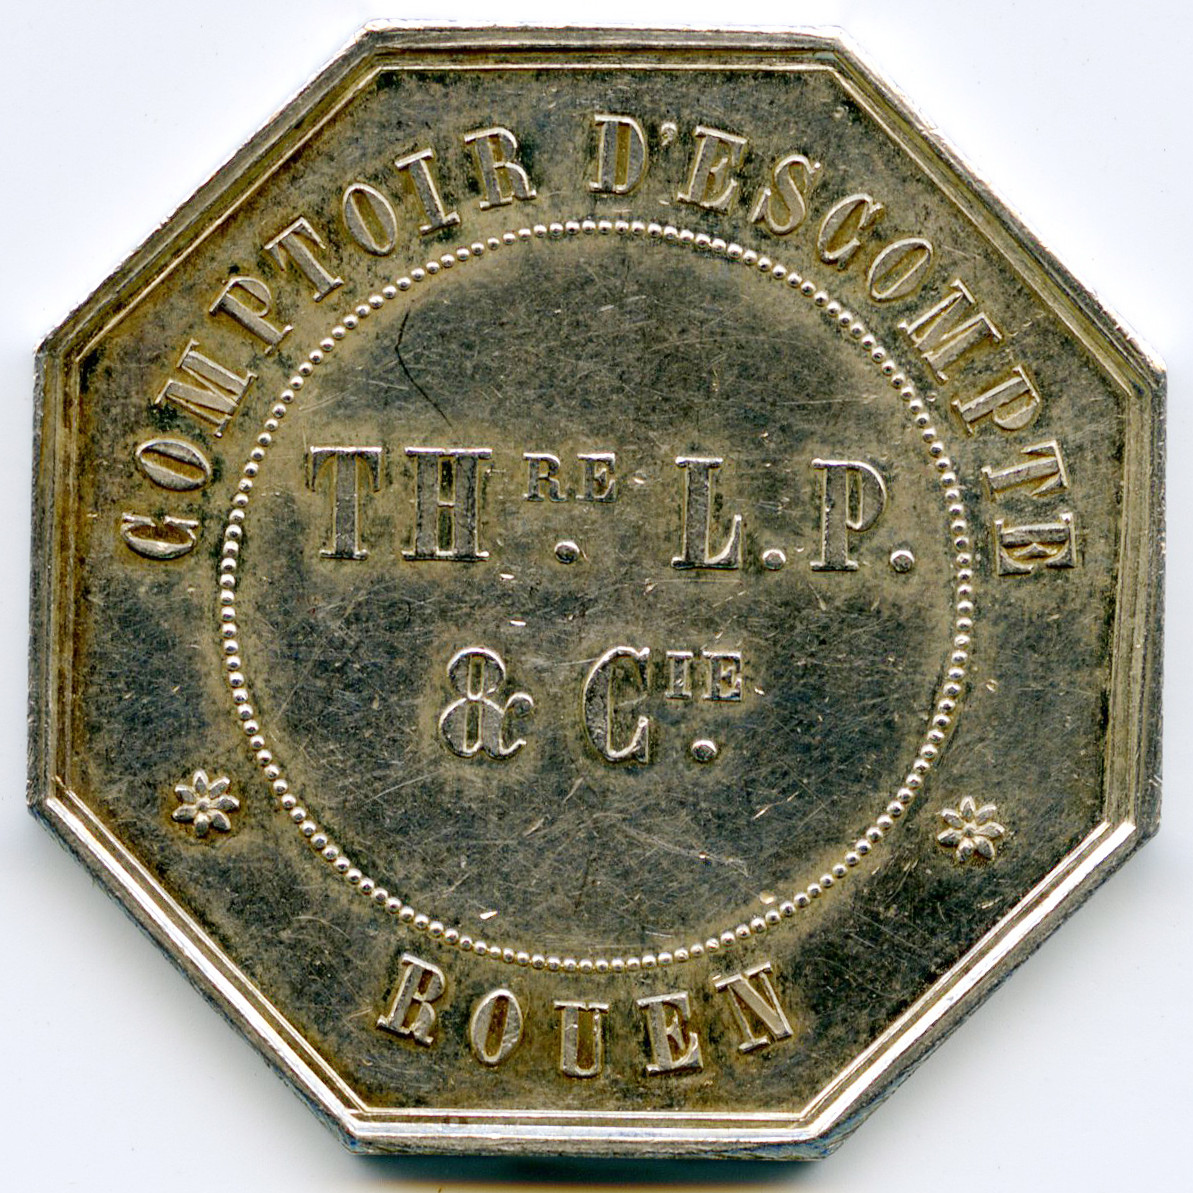 Comptoir d’escompte de Rouen - 1854 revers